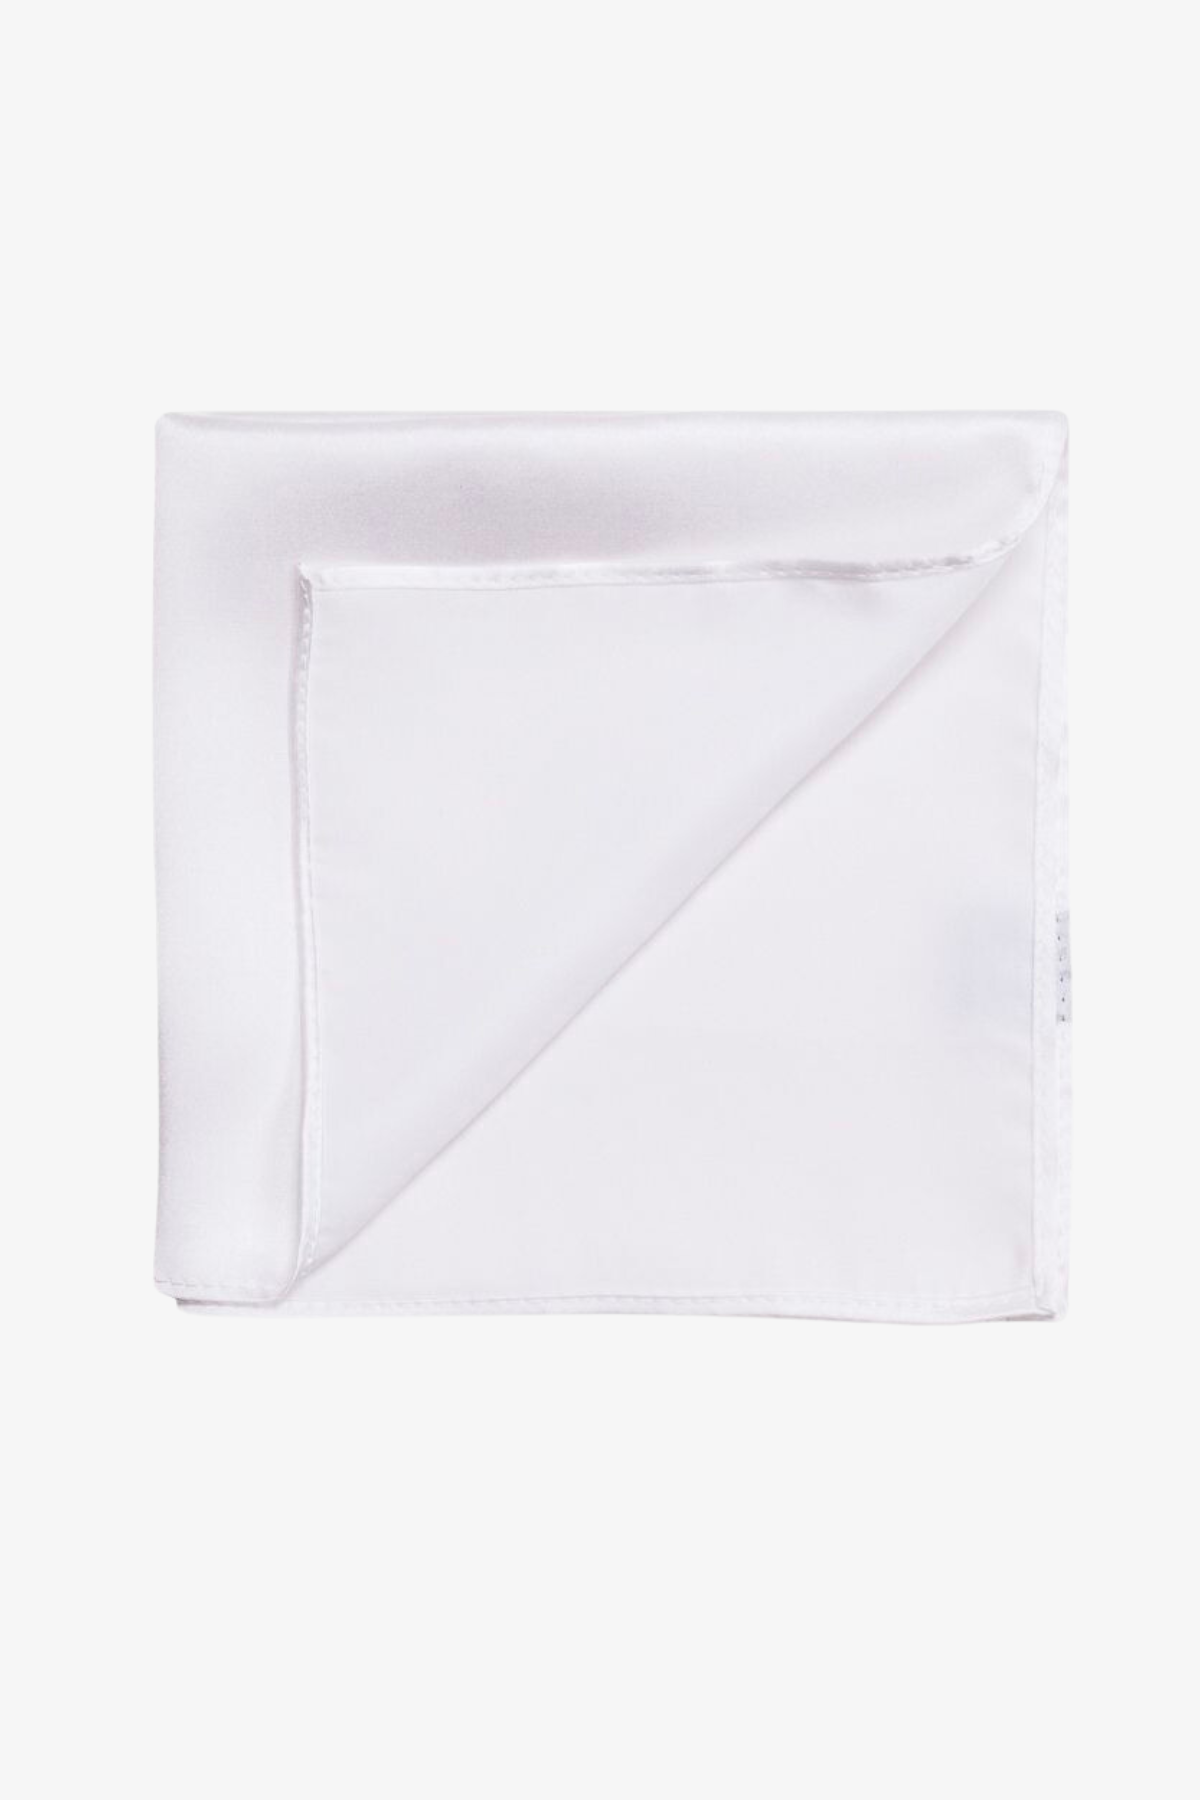 White Pocket square